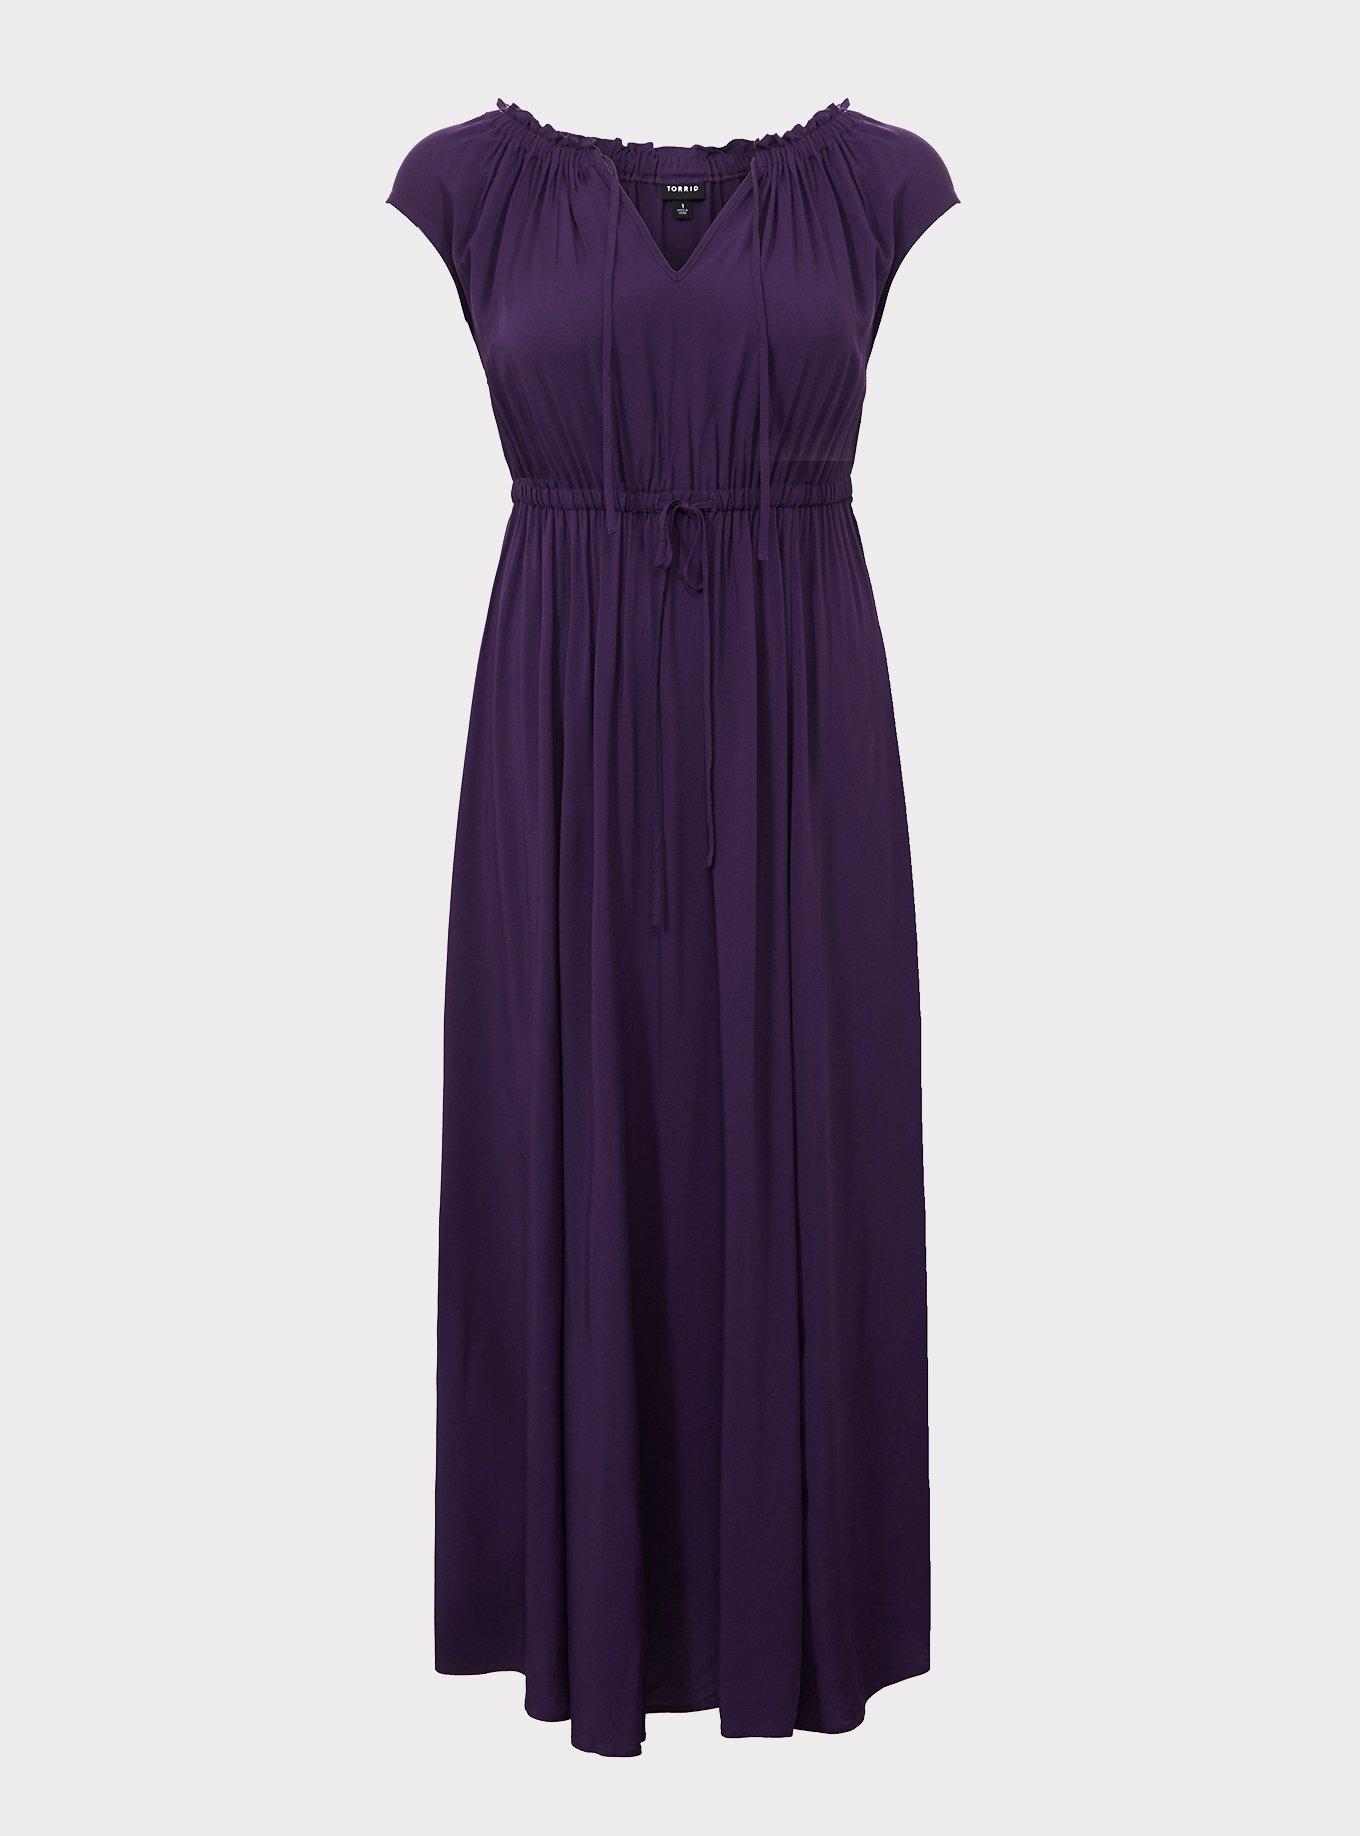 Torrid Solid Purple Casual Dress Size 2X Plus (2) (Plus) - 63% off